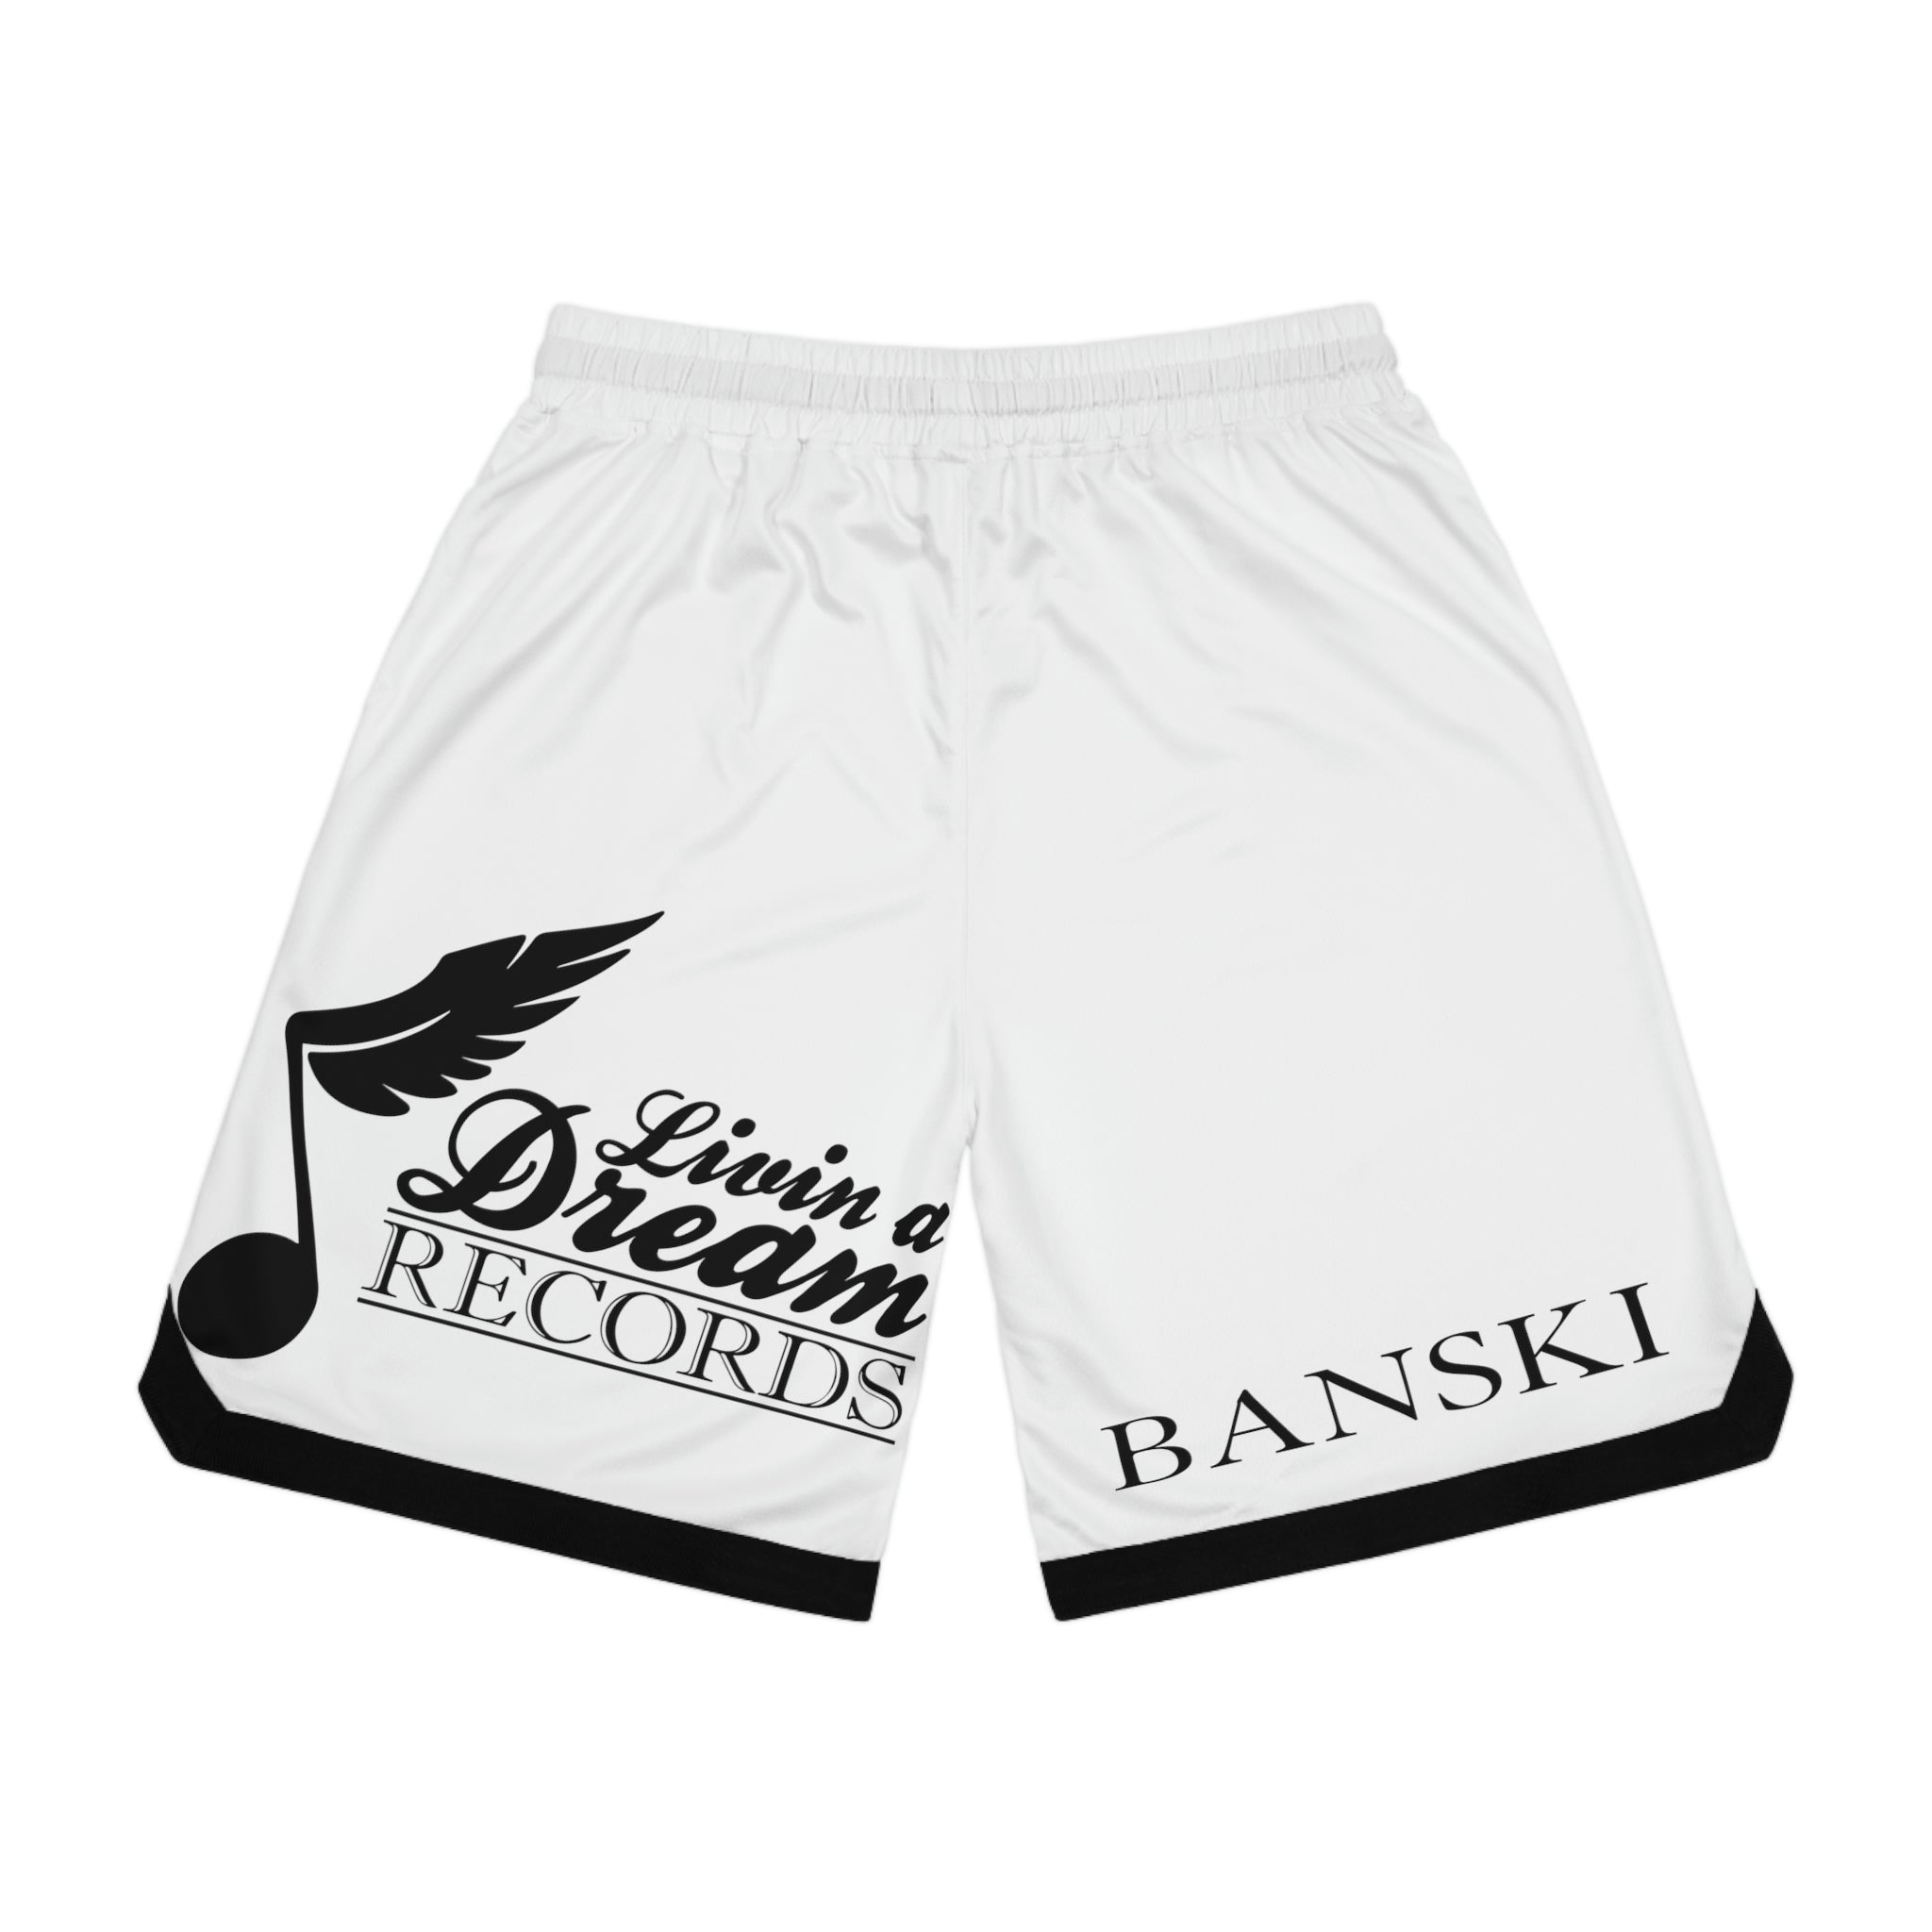 Livin A Dream Records / Banski - Basketball Rib Shorts